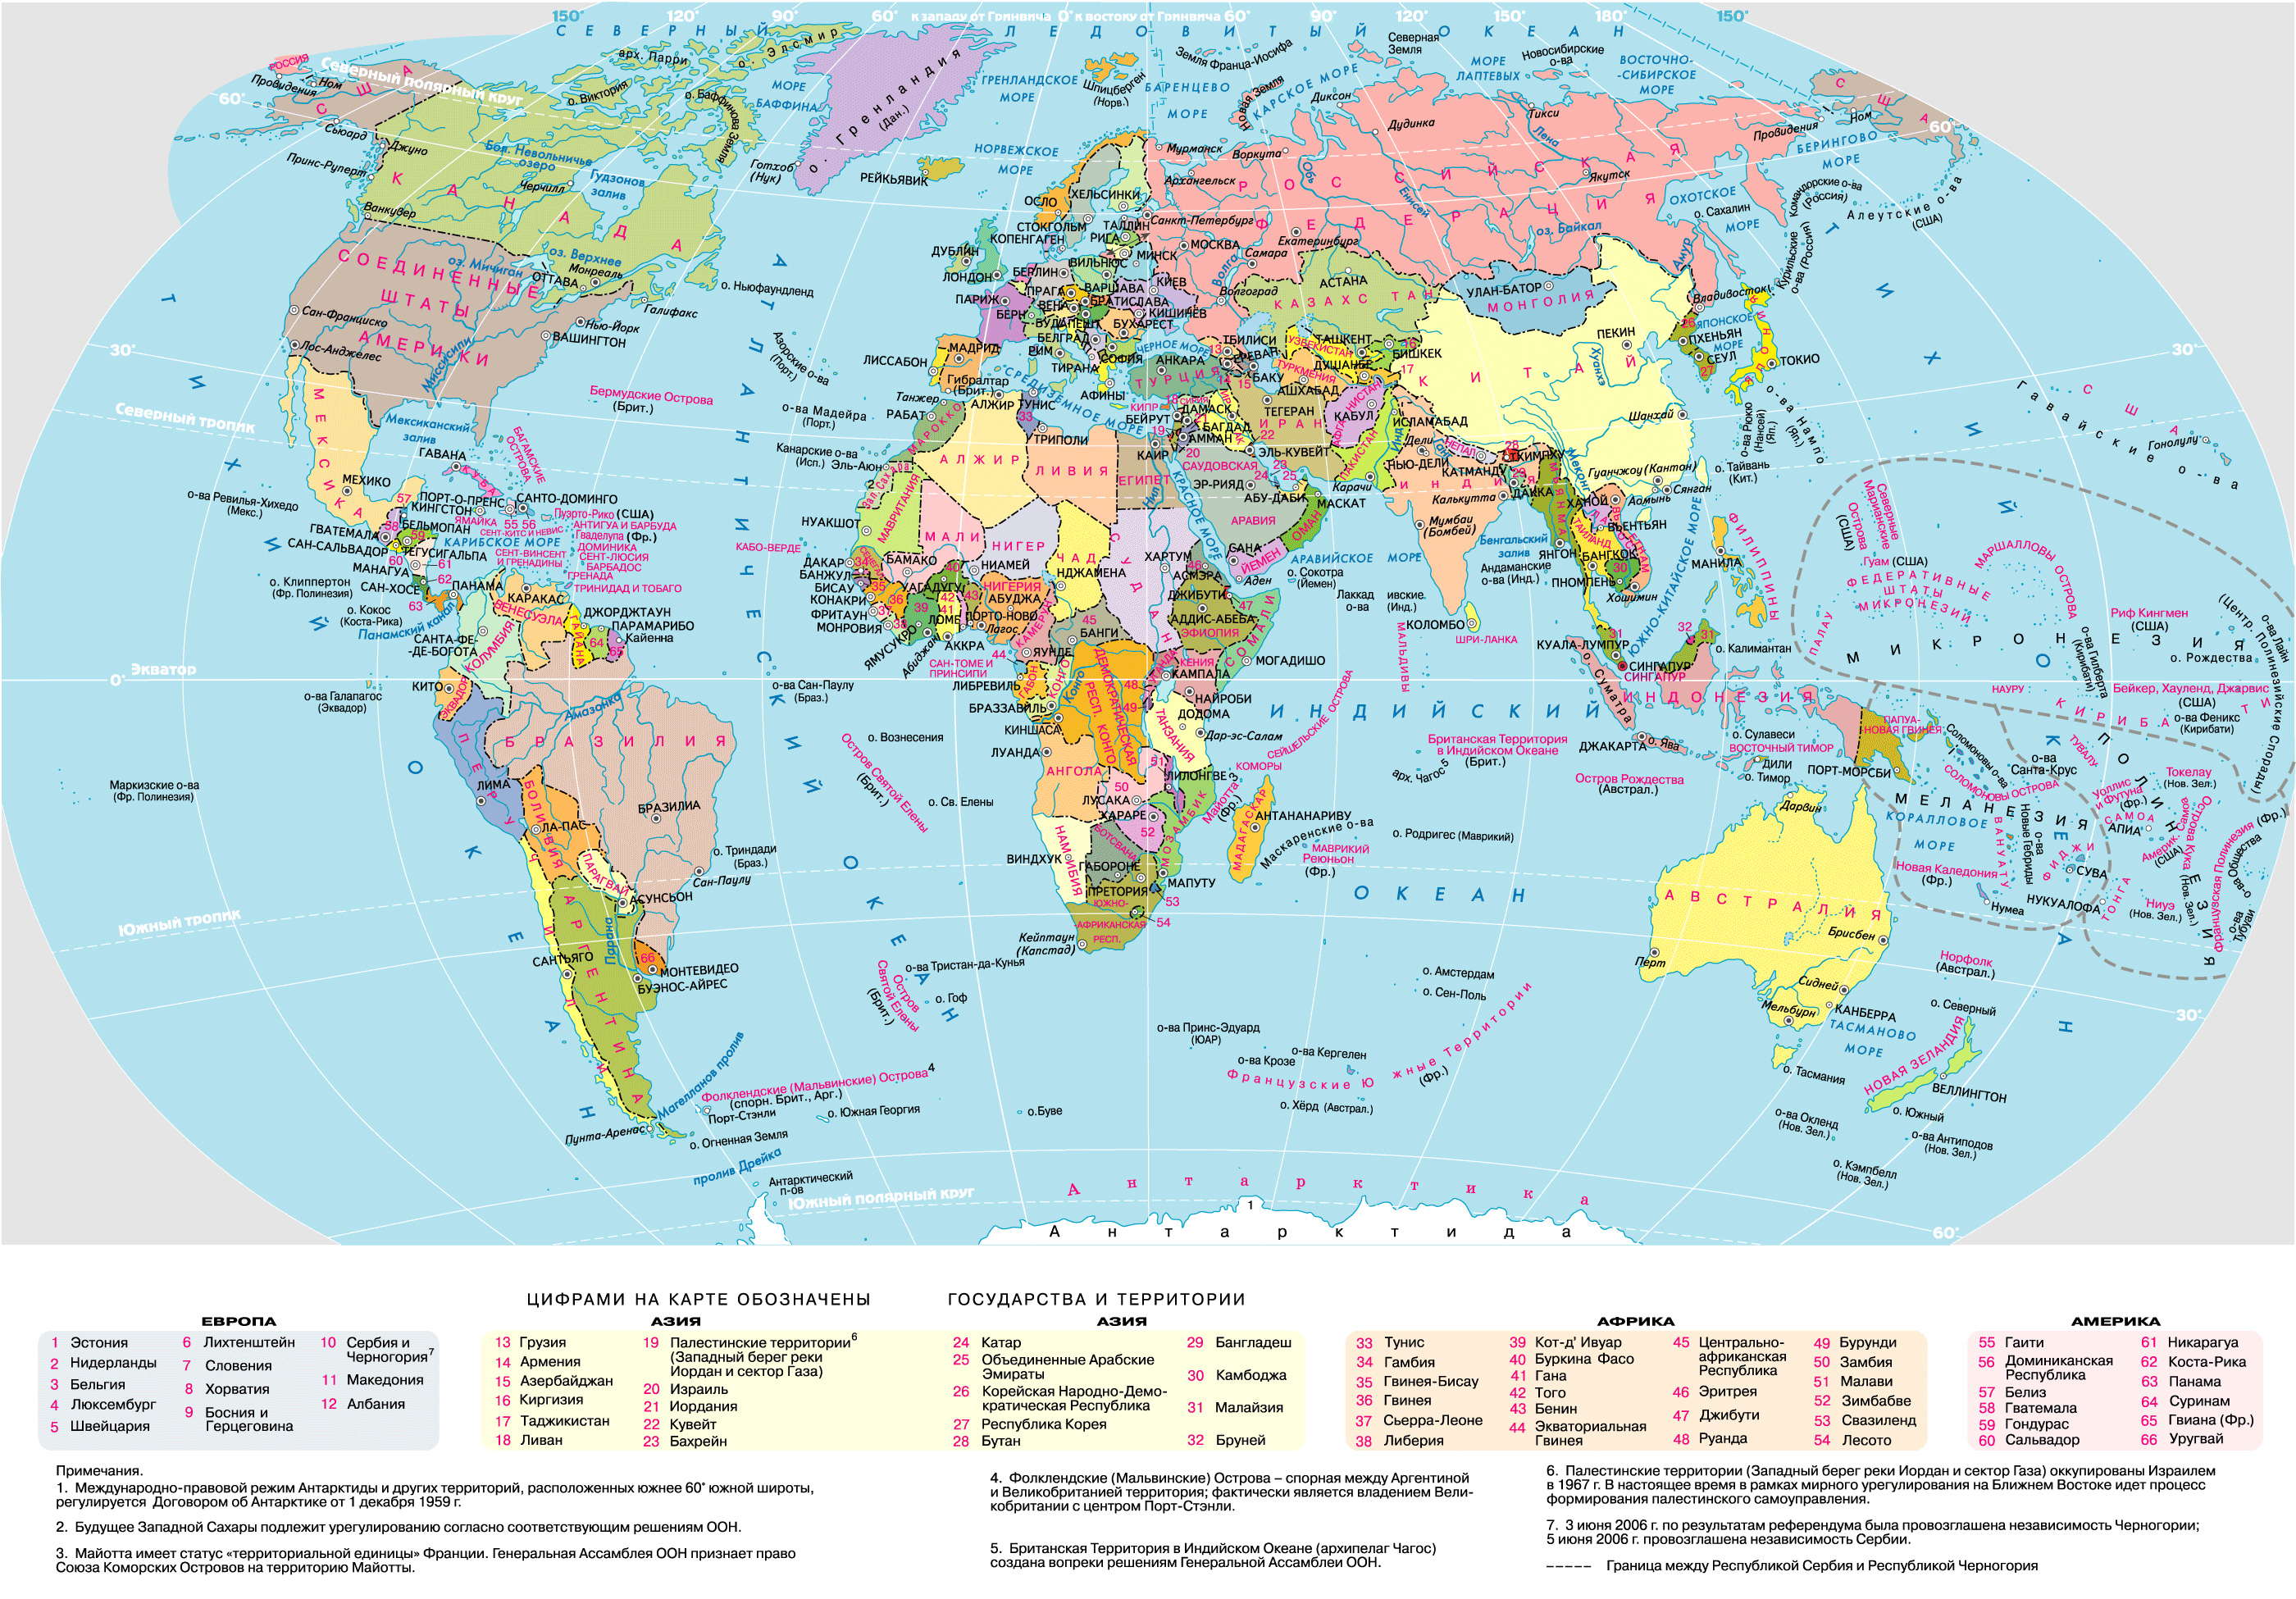 world maps images